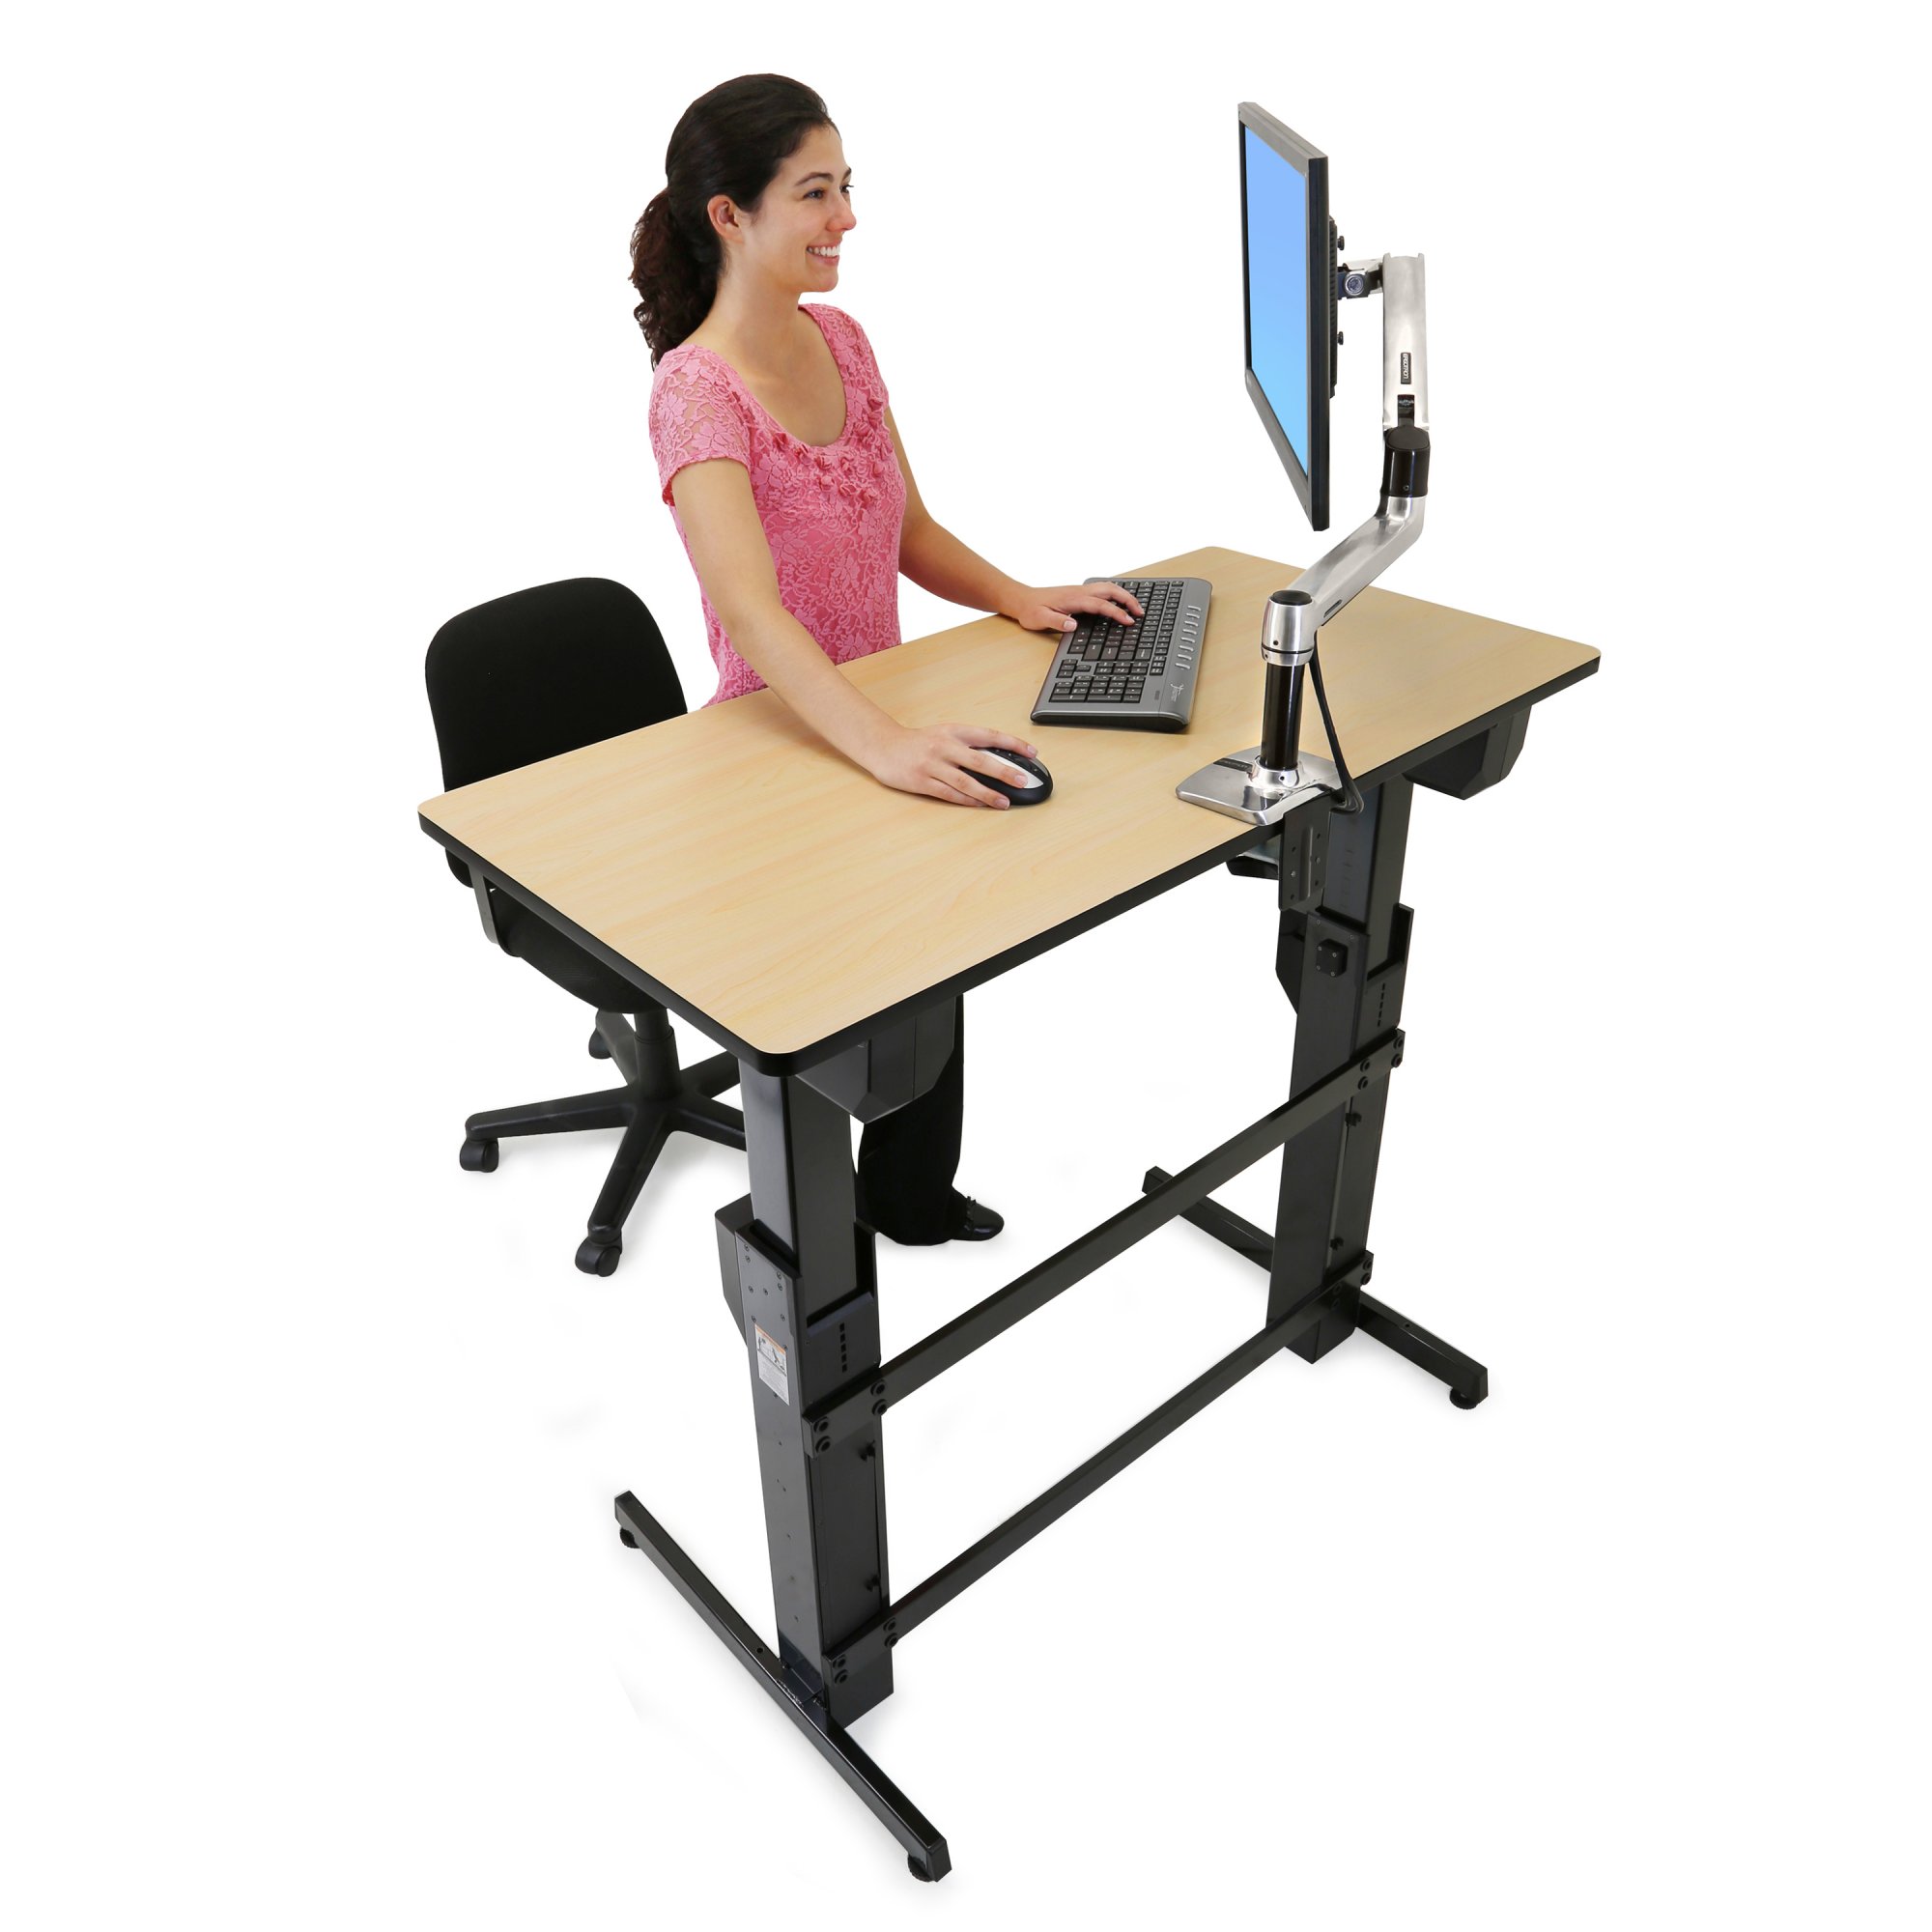 Ergotron 24-271-928 WorkFit-D, Sit-Stand Desk 